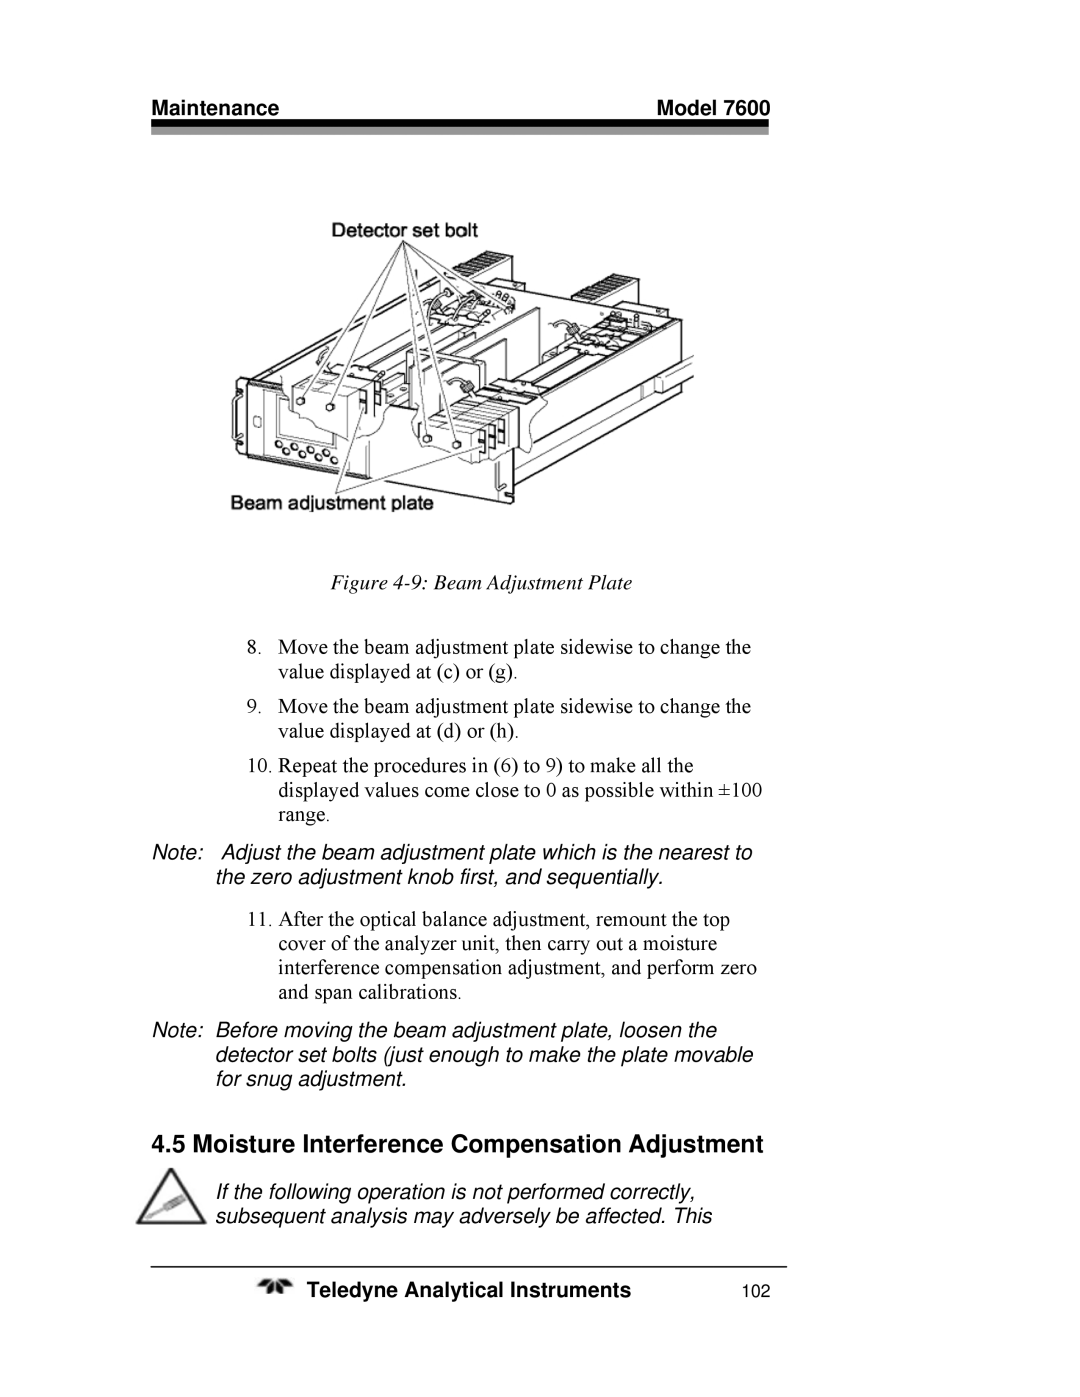 Teledyne 7600 operating instructions Moisture Interference Compensation Adjustment, Beam Adjustment Plate 